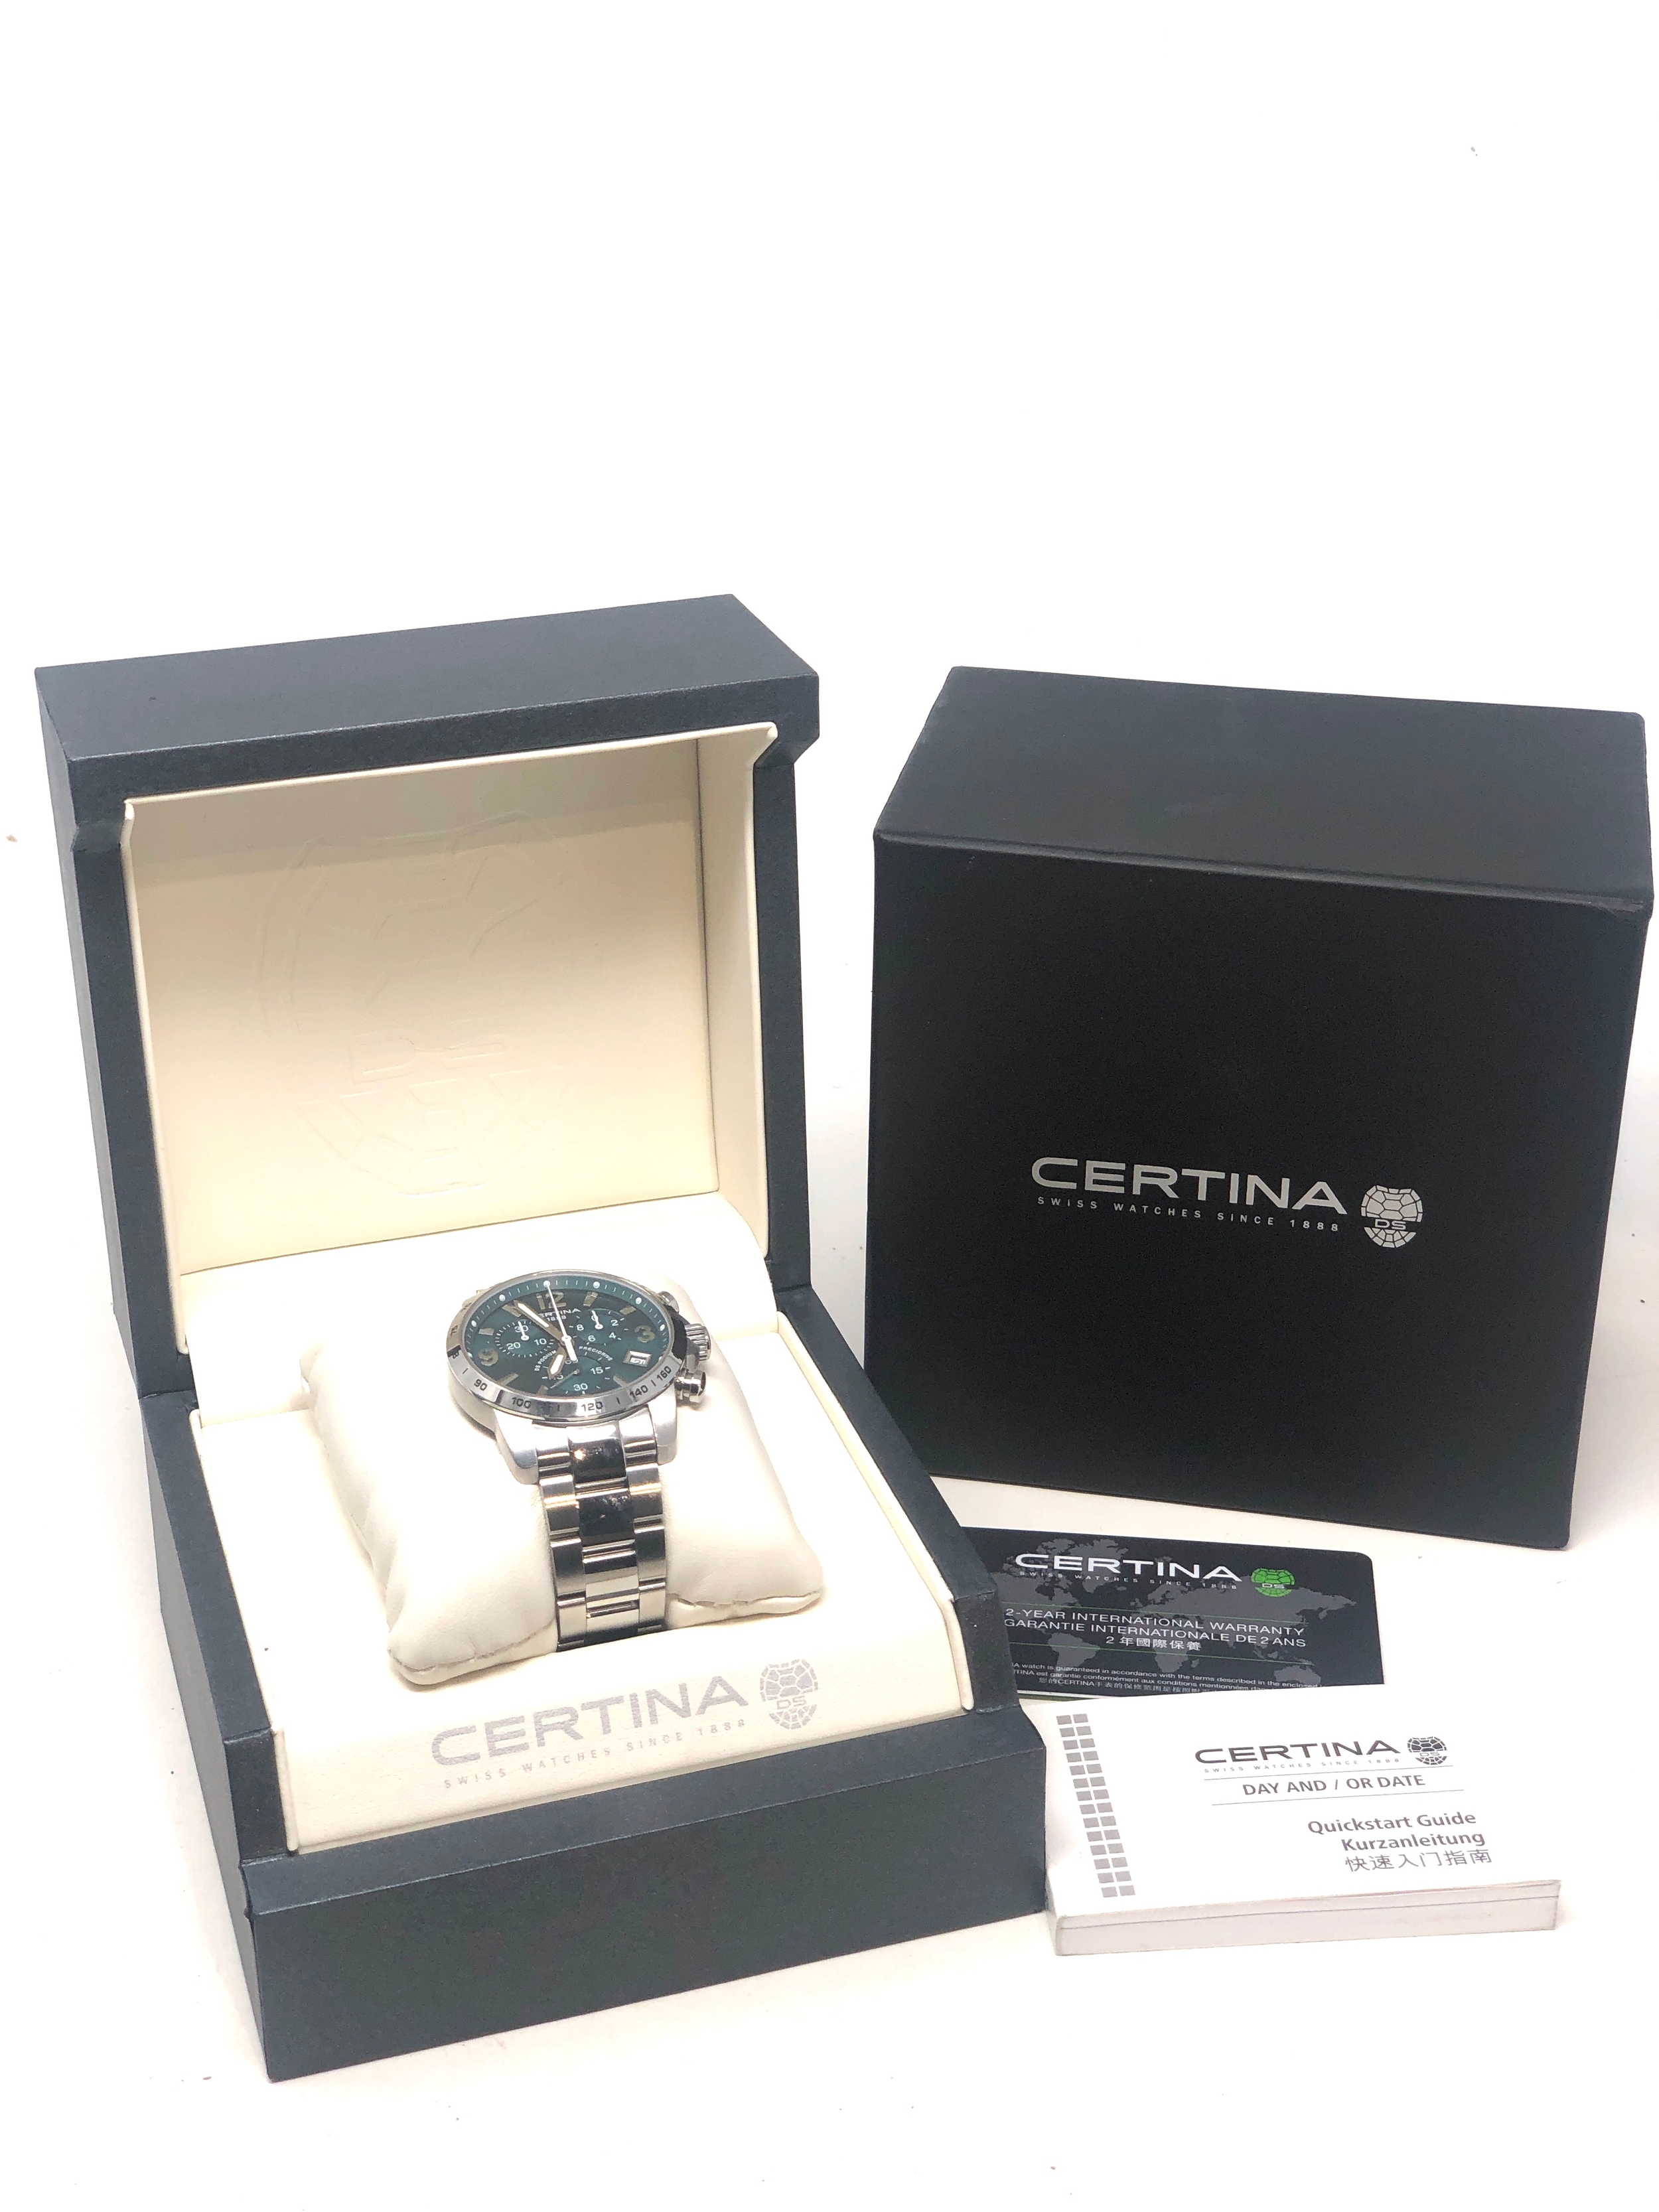 Boxed Gents certina 1888 quartz wristwatch the watch is ticking